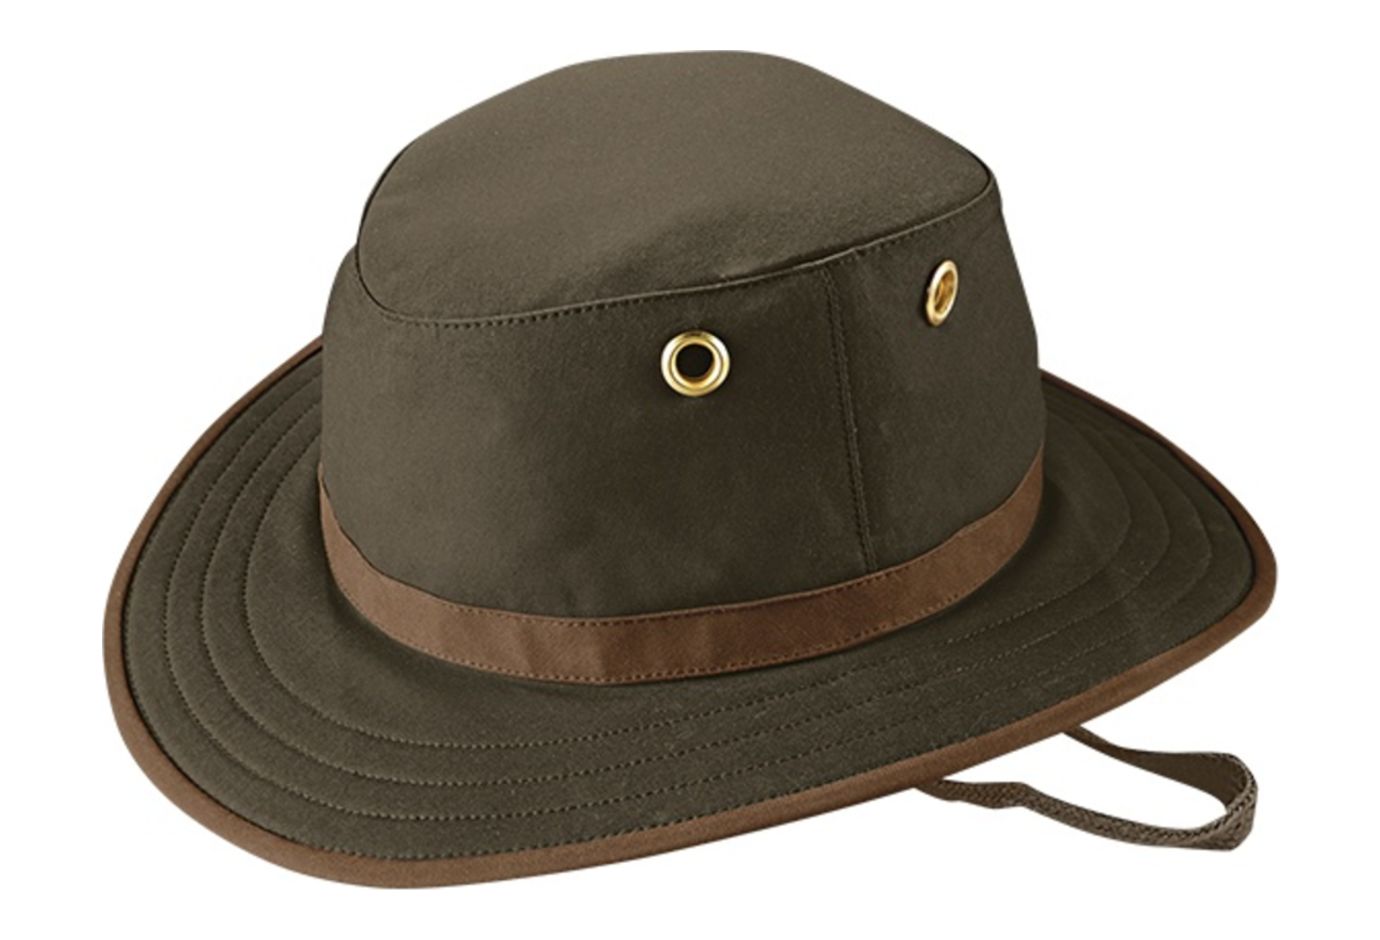 hat tilley waxed cotton outback medium hats brimmed british wax brim headwear outdoors